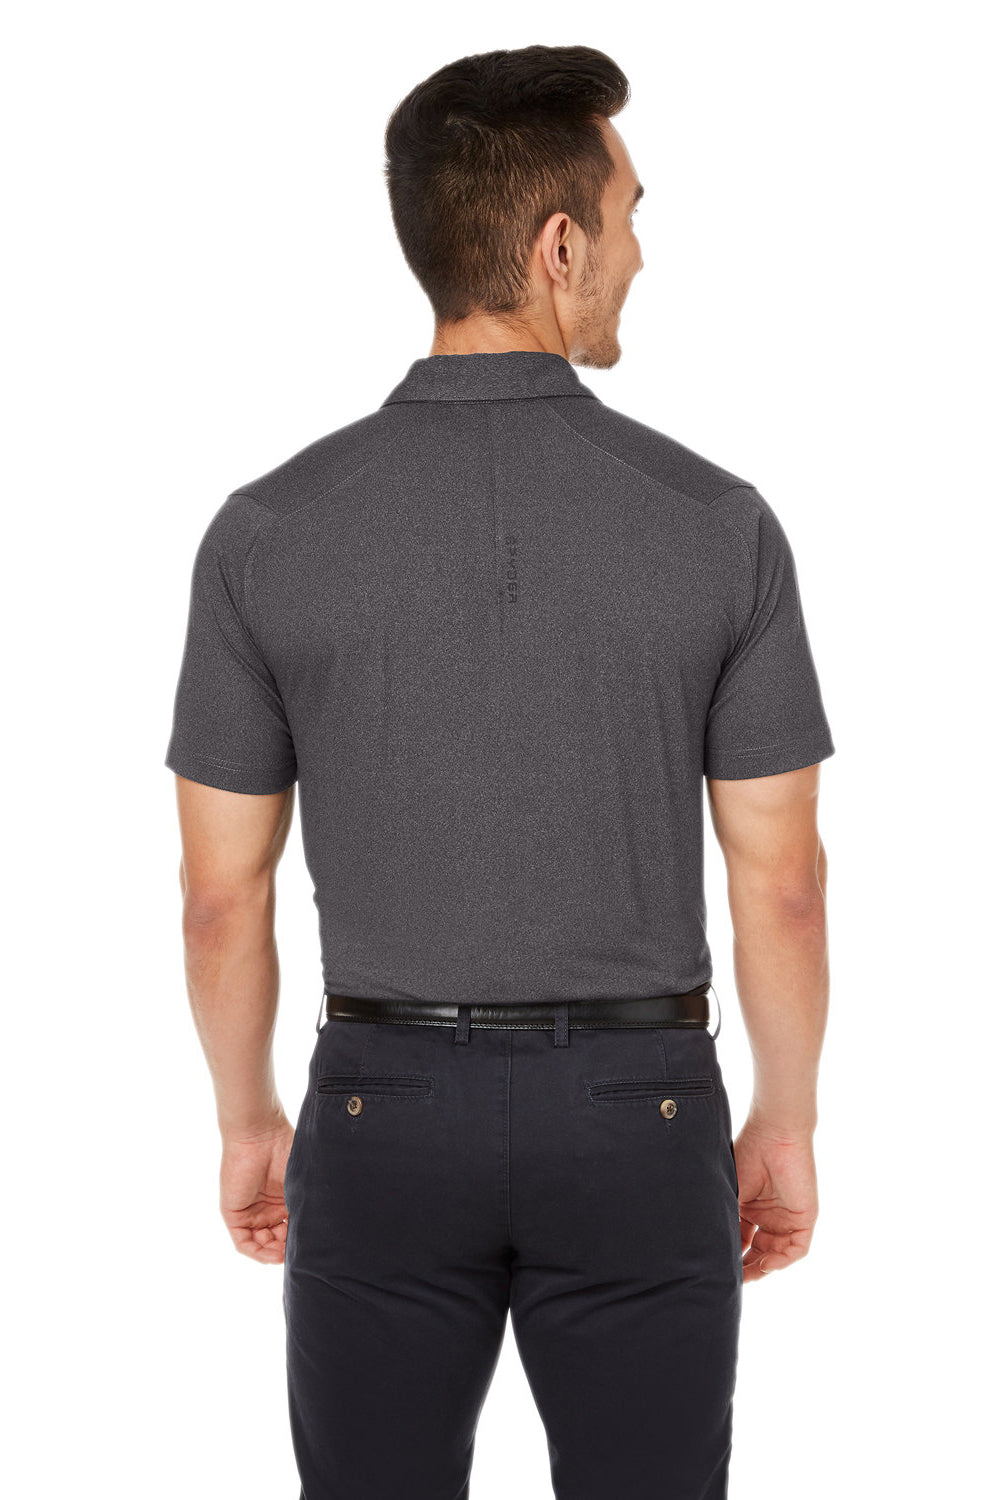 Spyder S17914 Mens Spyre Short Sleeve Polo Shirt Black Frost Back